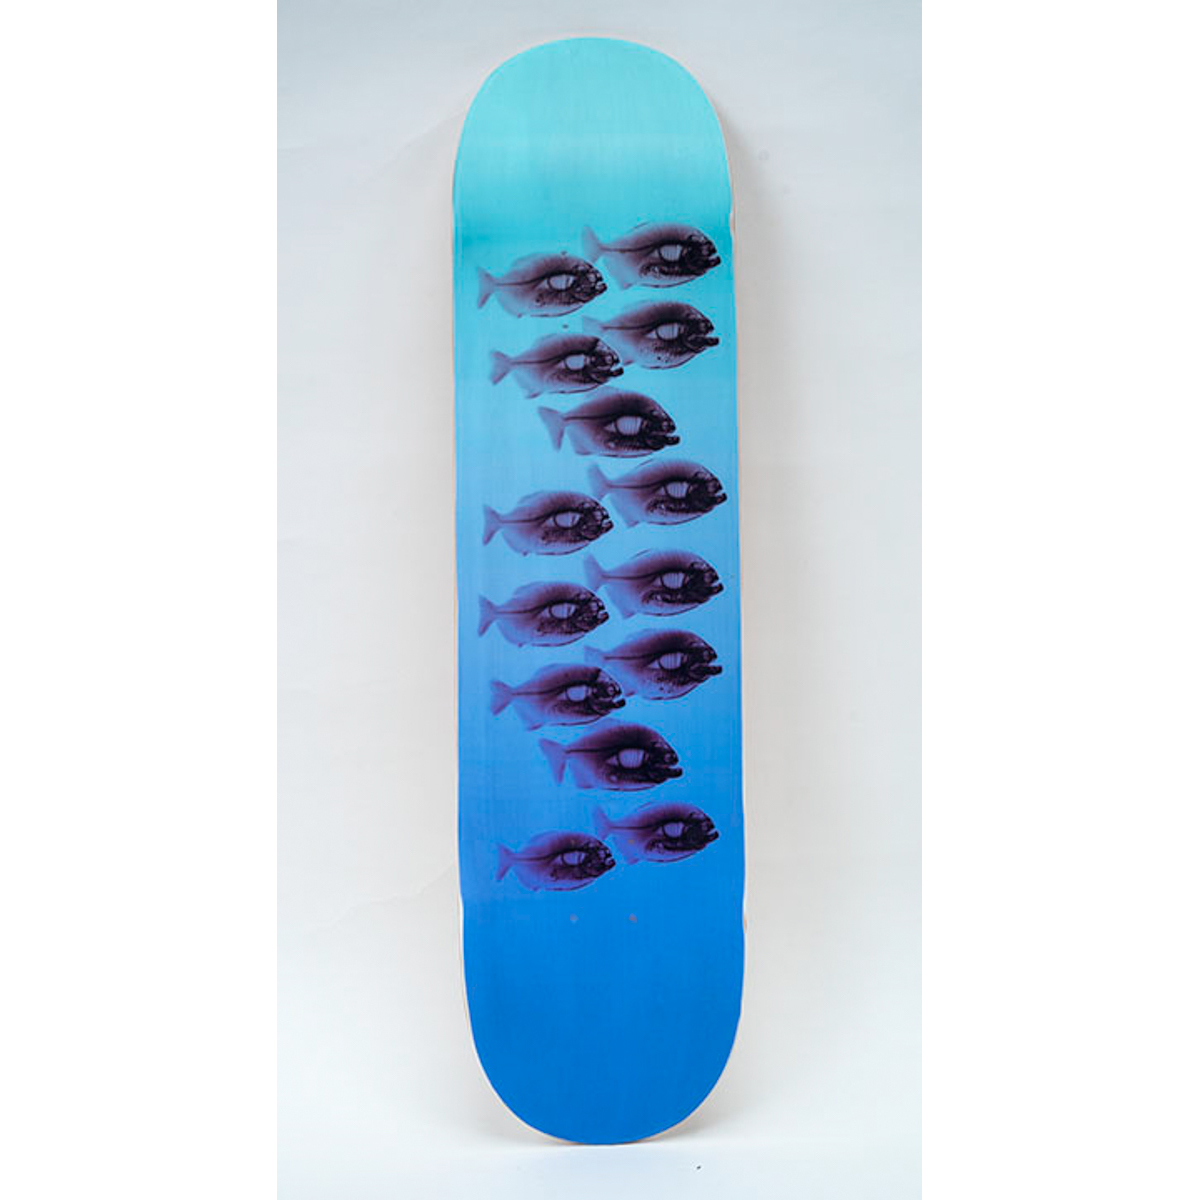 gras per ongeluk verlies uzelf 016A Piranhas on Gradient Blue, 2019. Unique Artist Skateboard by Steve  Miller. - Stevemiller Dot Art